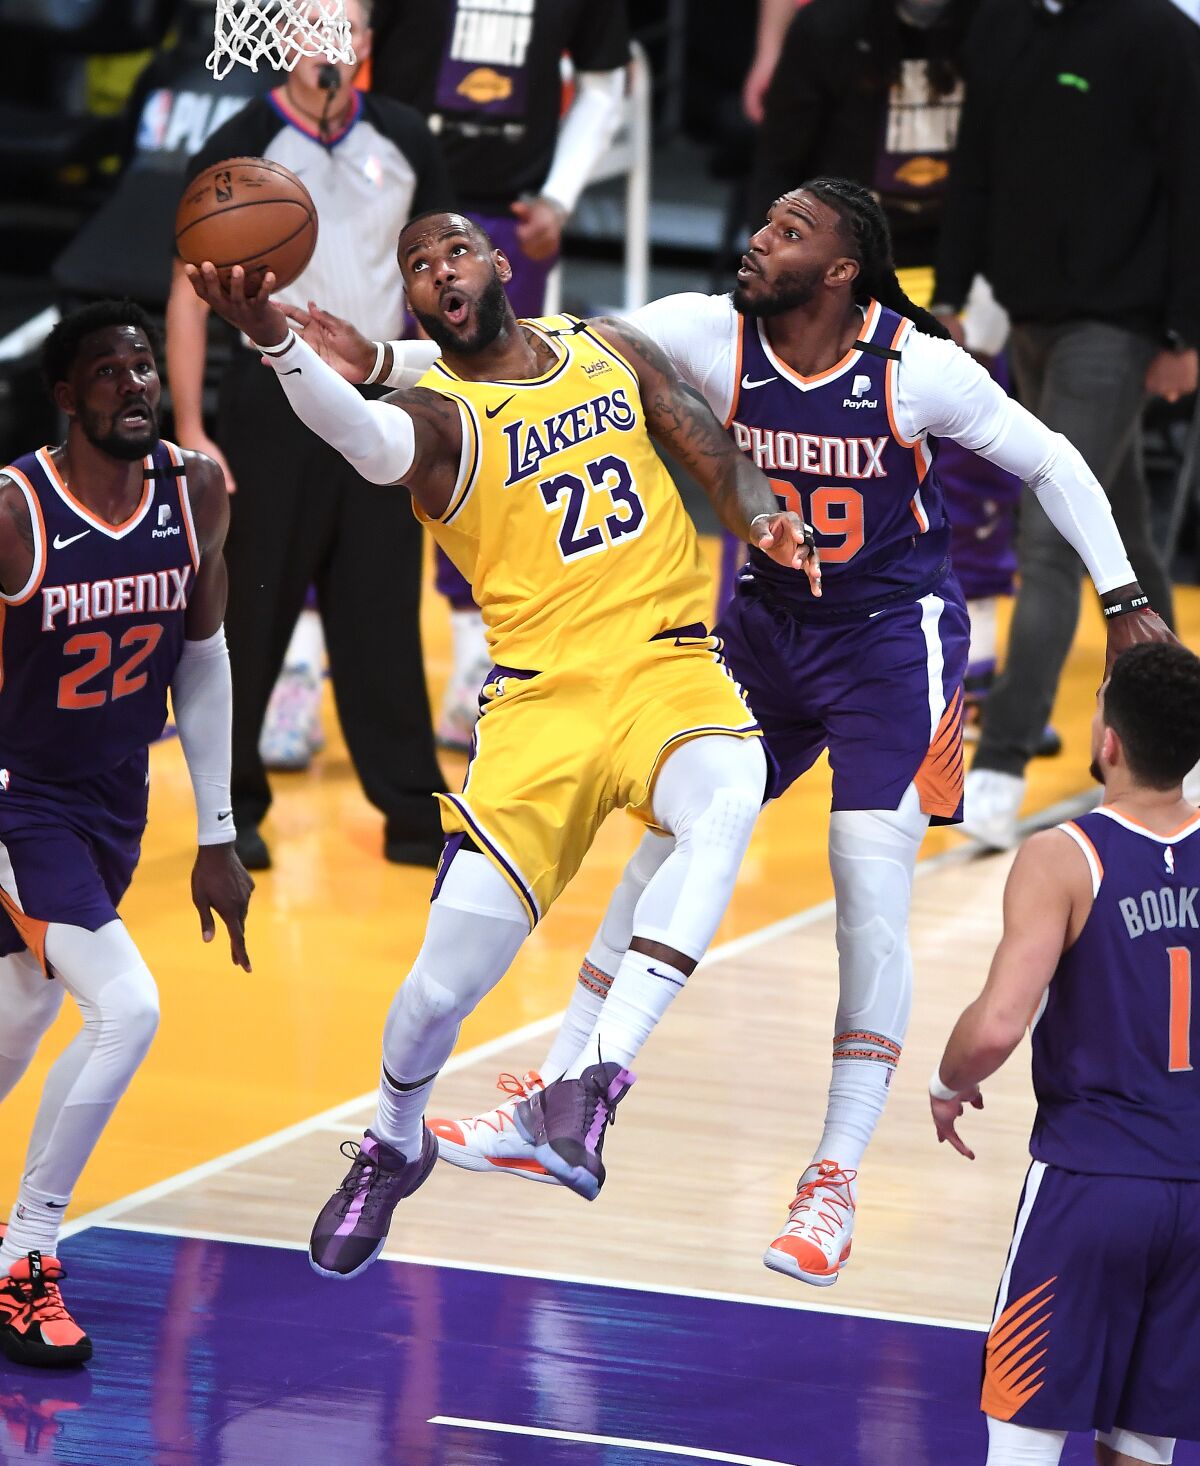 Lakers forward LeBron James scores on a reverse layup against Suns forward Jae Crowder.